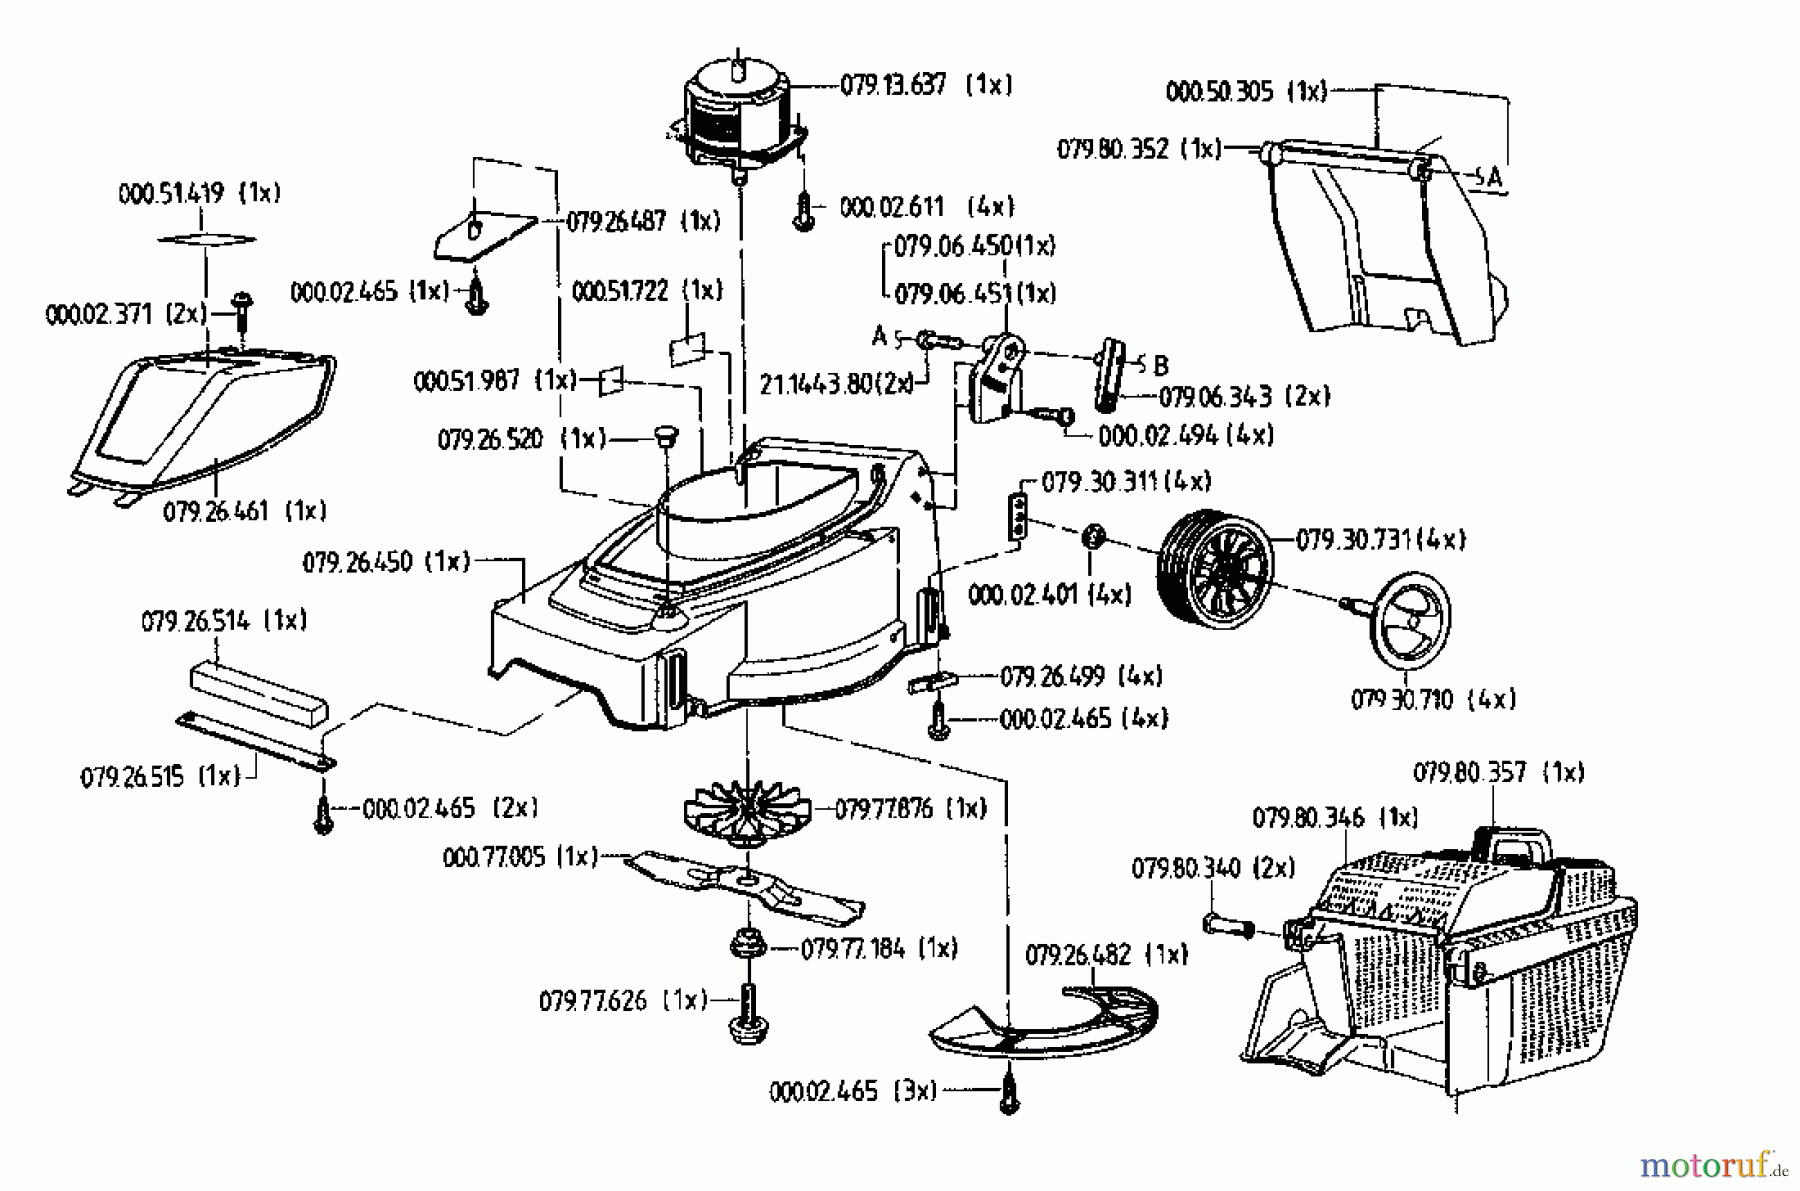  Gutbrod Electric mower HE 33 02821.01  (1995) Basic machine